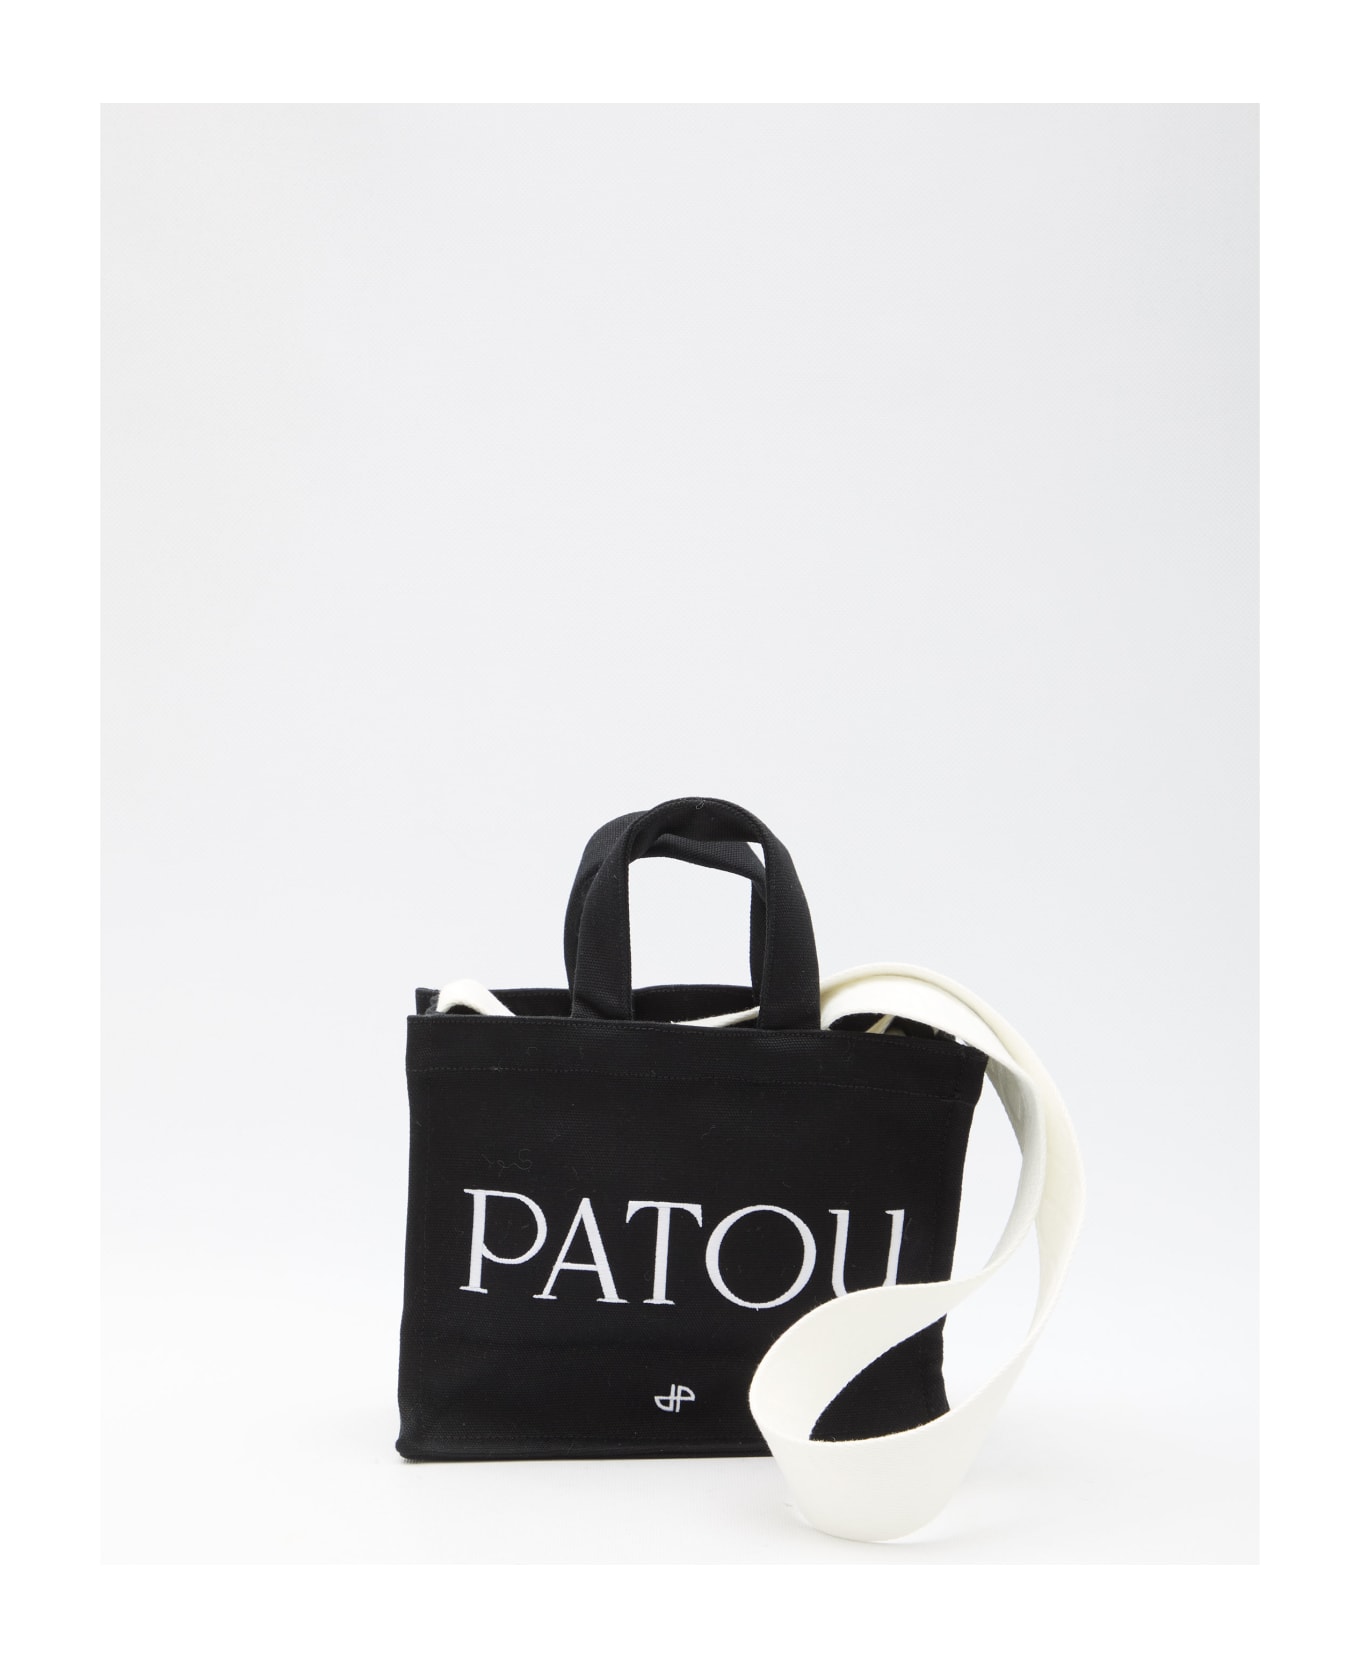 Patou Small Tote Bag - BLACK